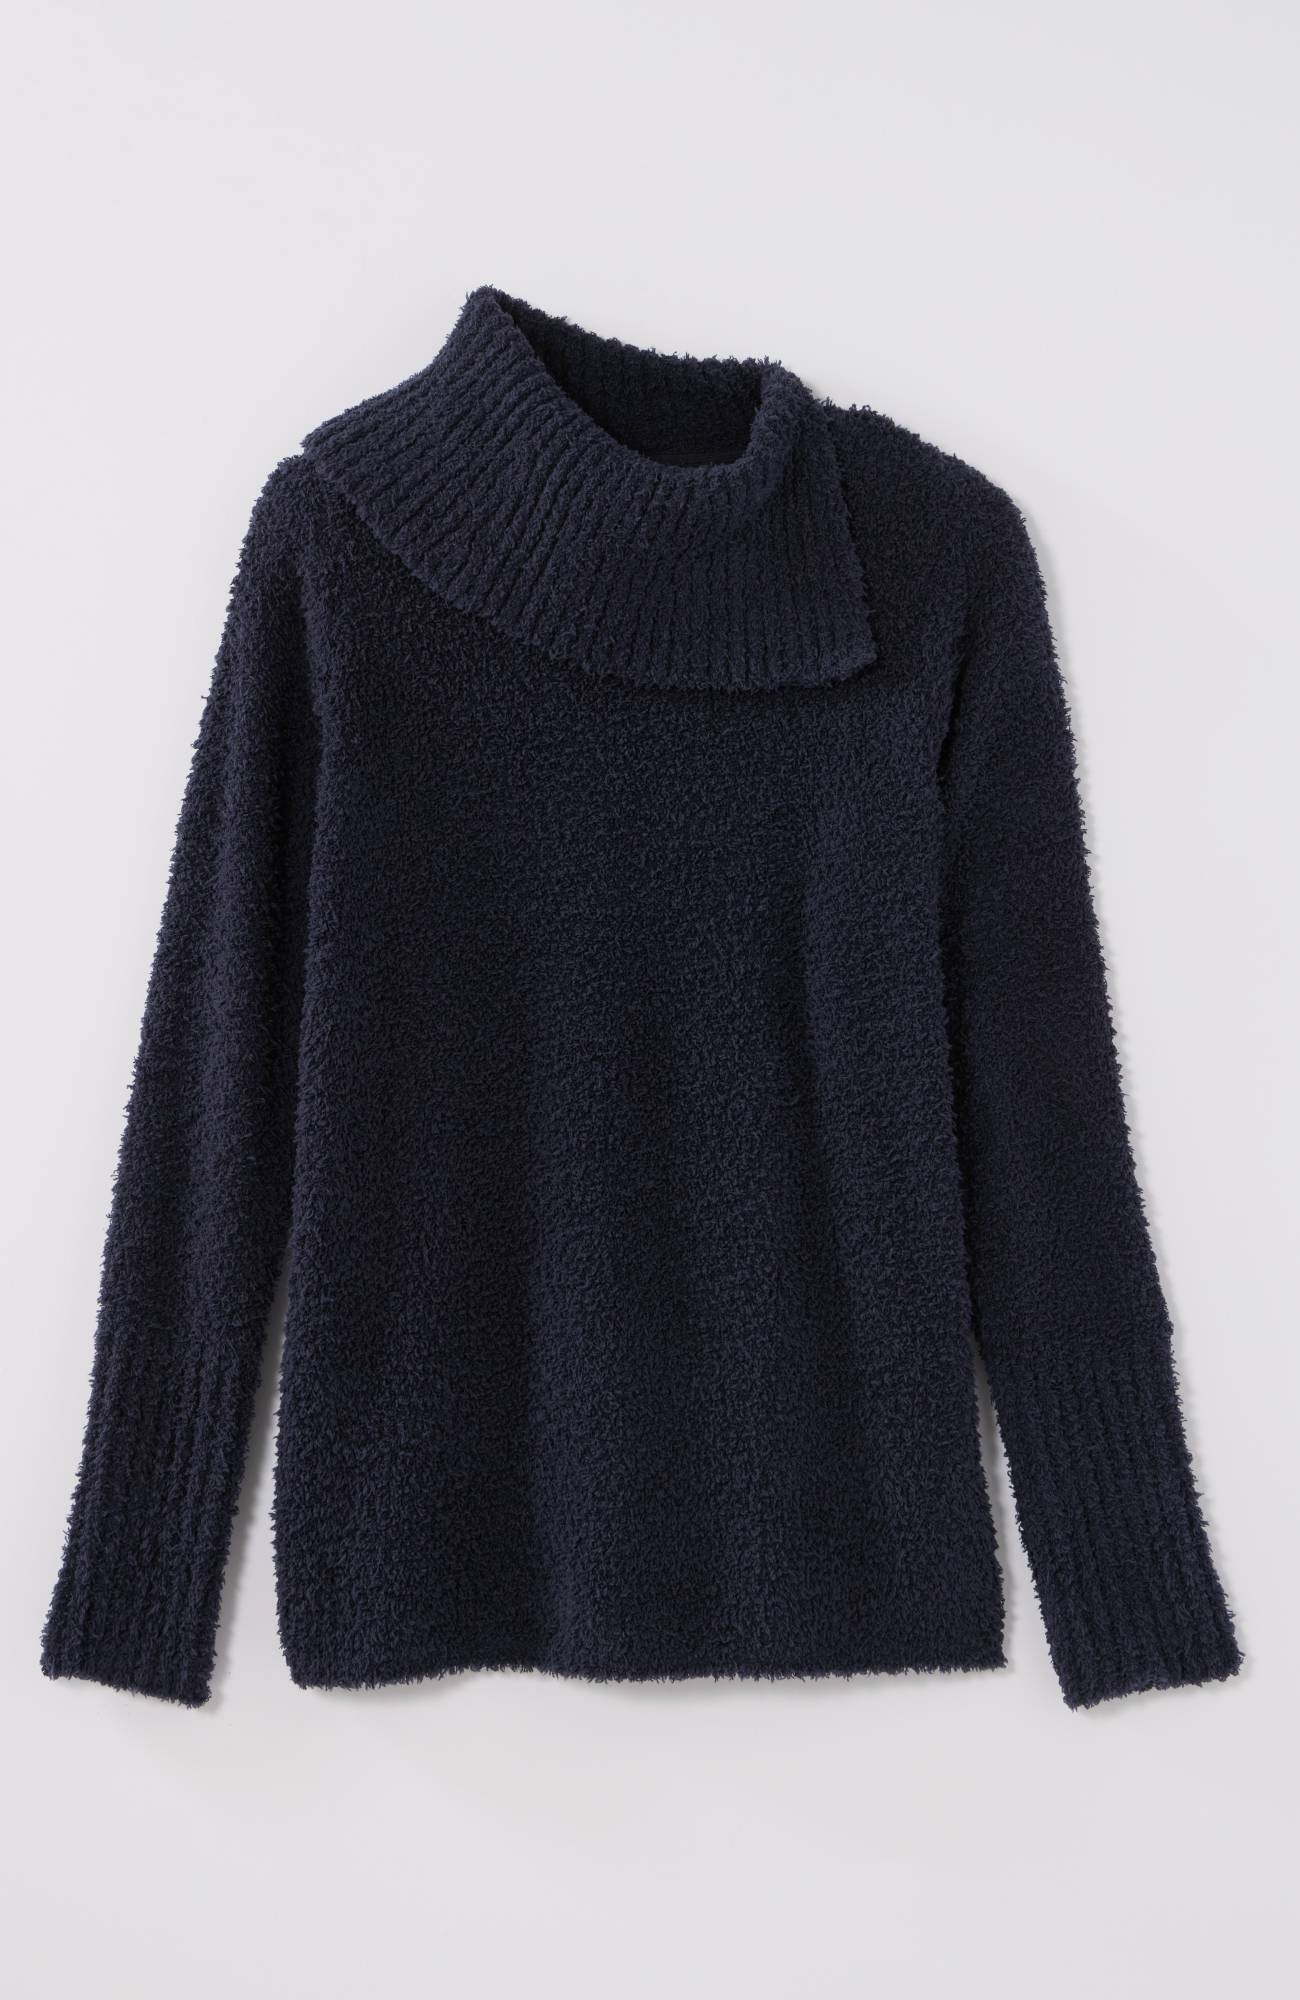 Pure Jill Soft & Cozy High-Neck Sweater